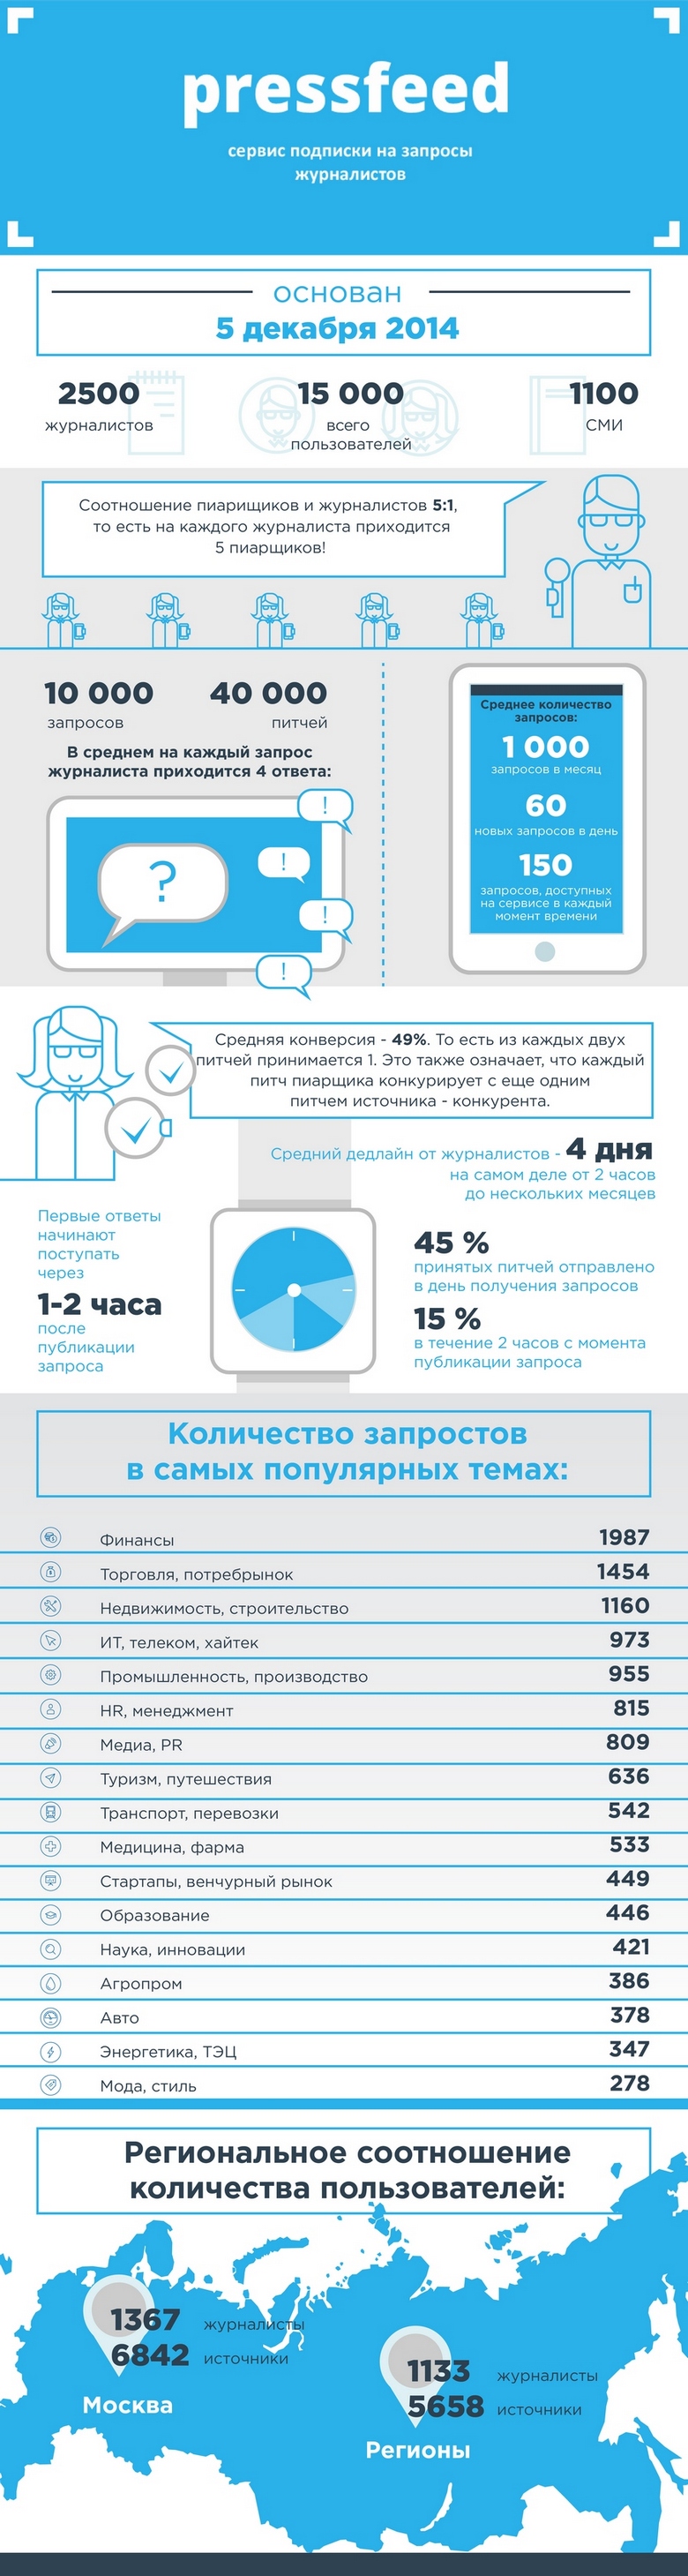 infographic_pressfeed_3-780